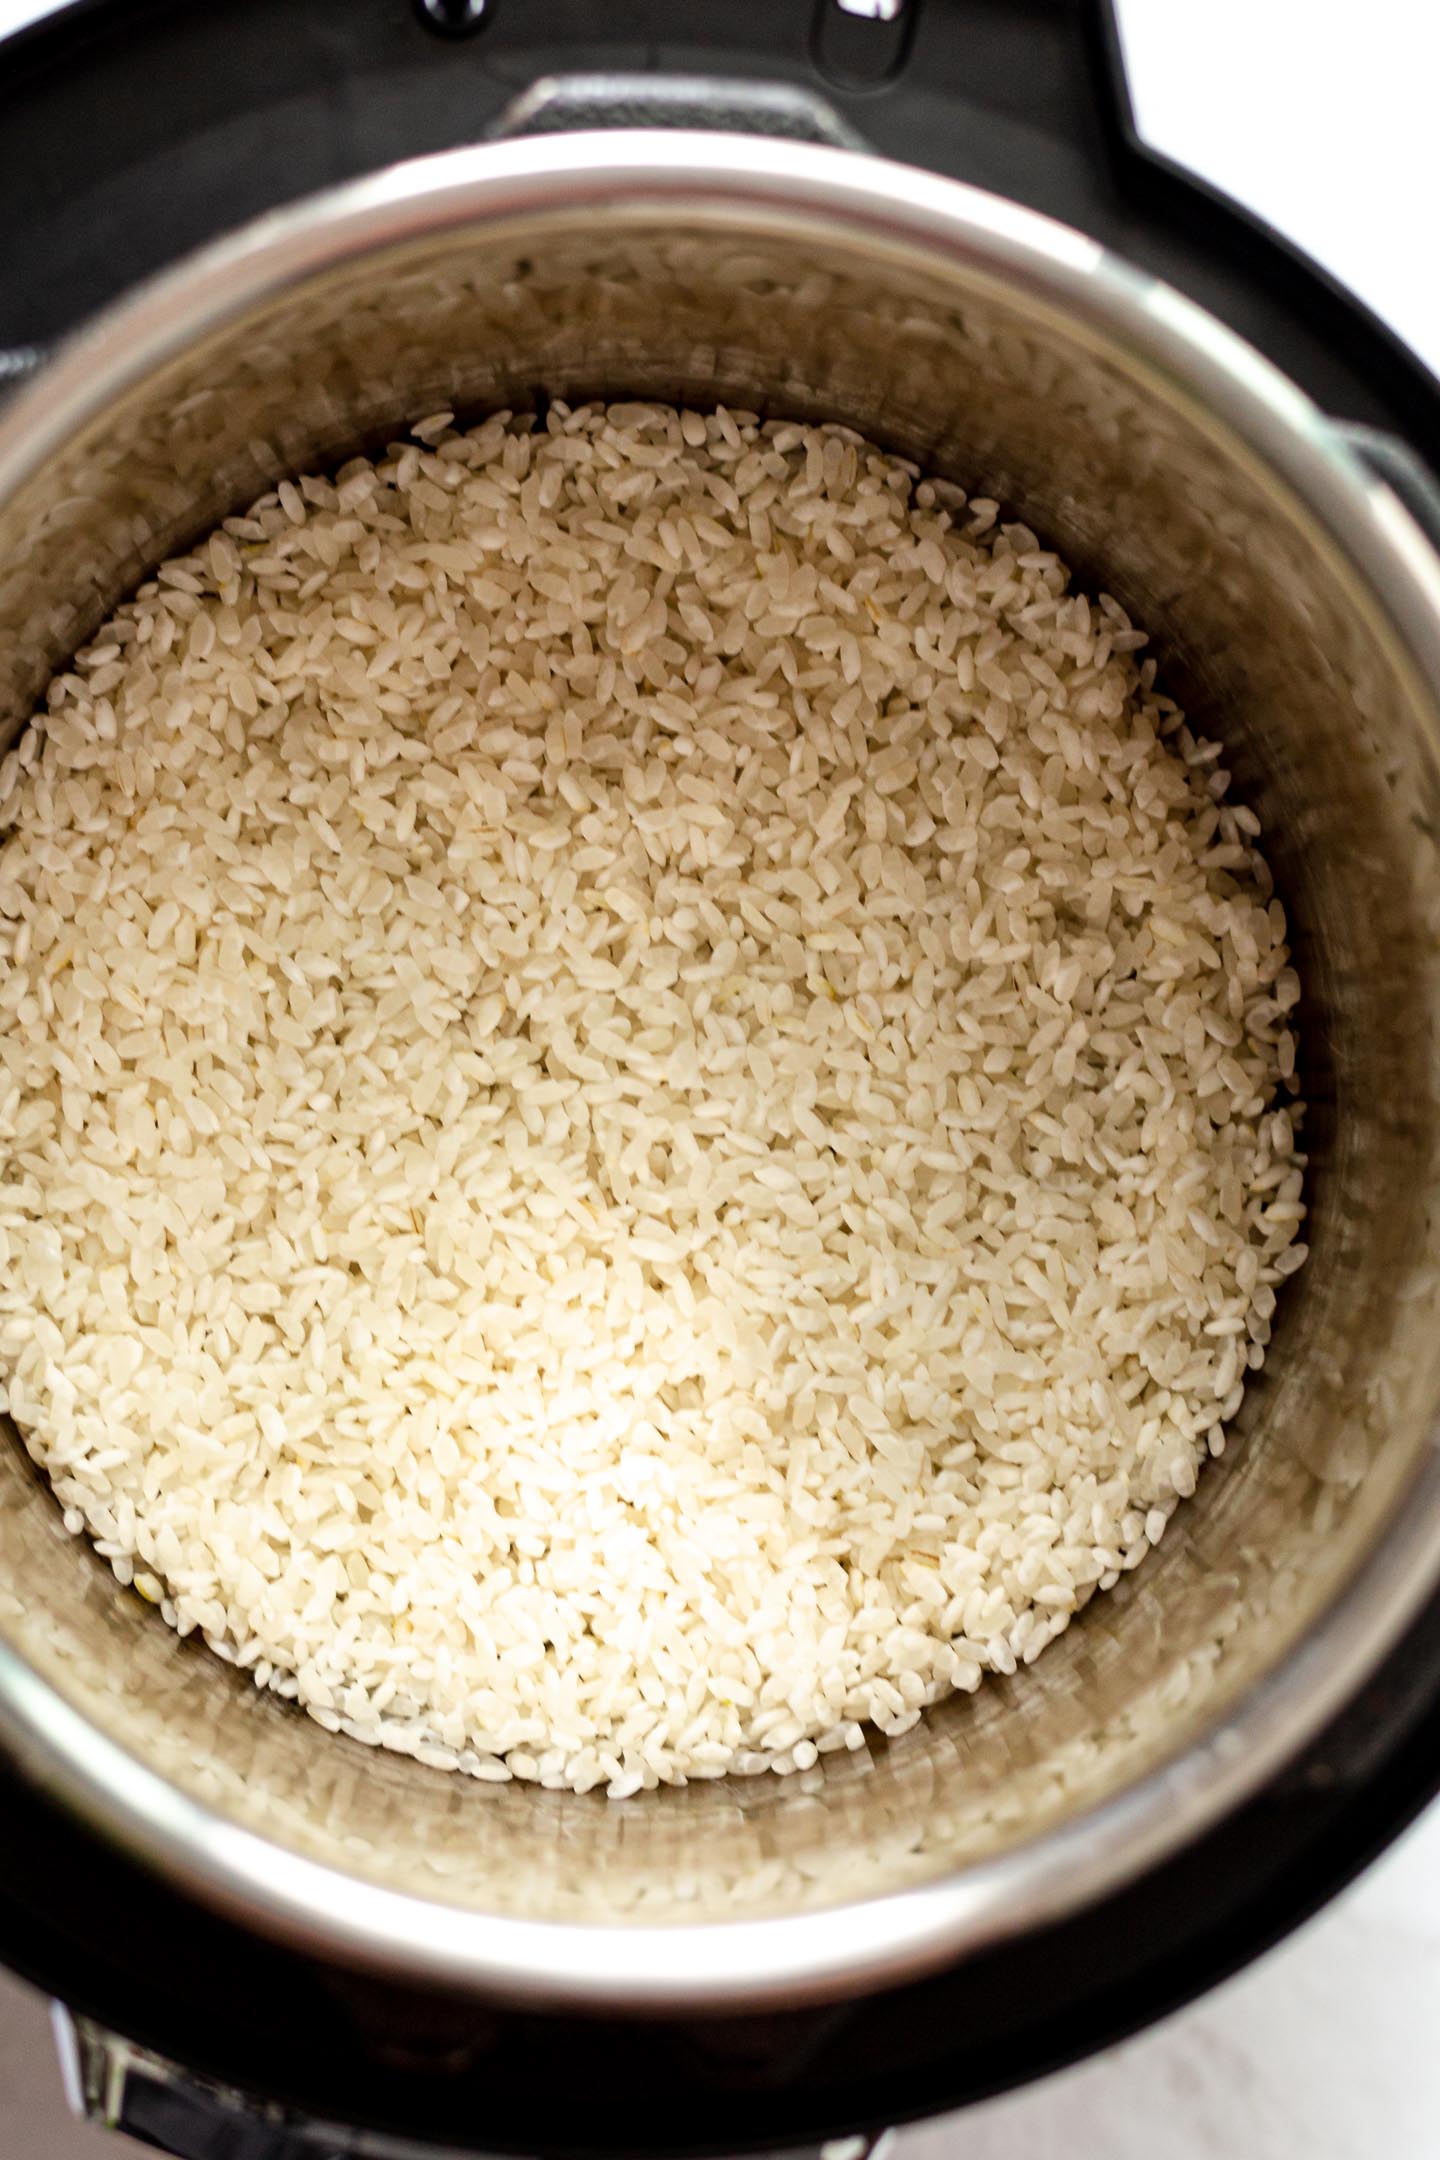 https://izumimizokawa.com/wp-content/uploads/2022/06/How-To-Make-White-Rice-In-Instant-Pot-STEP-2-Put-Rice-in-Pot-Vegan-Asian-Recipes-by-Izumi-Mizokawa.jpg